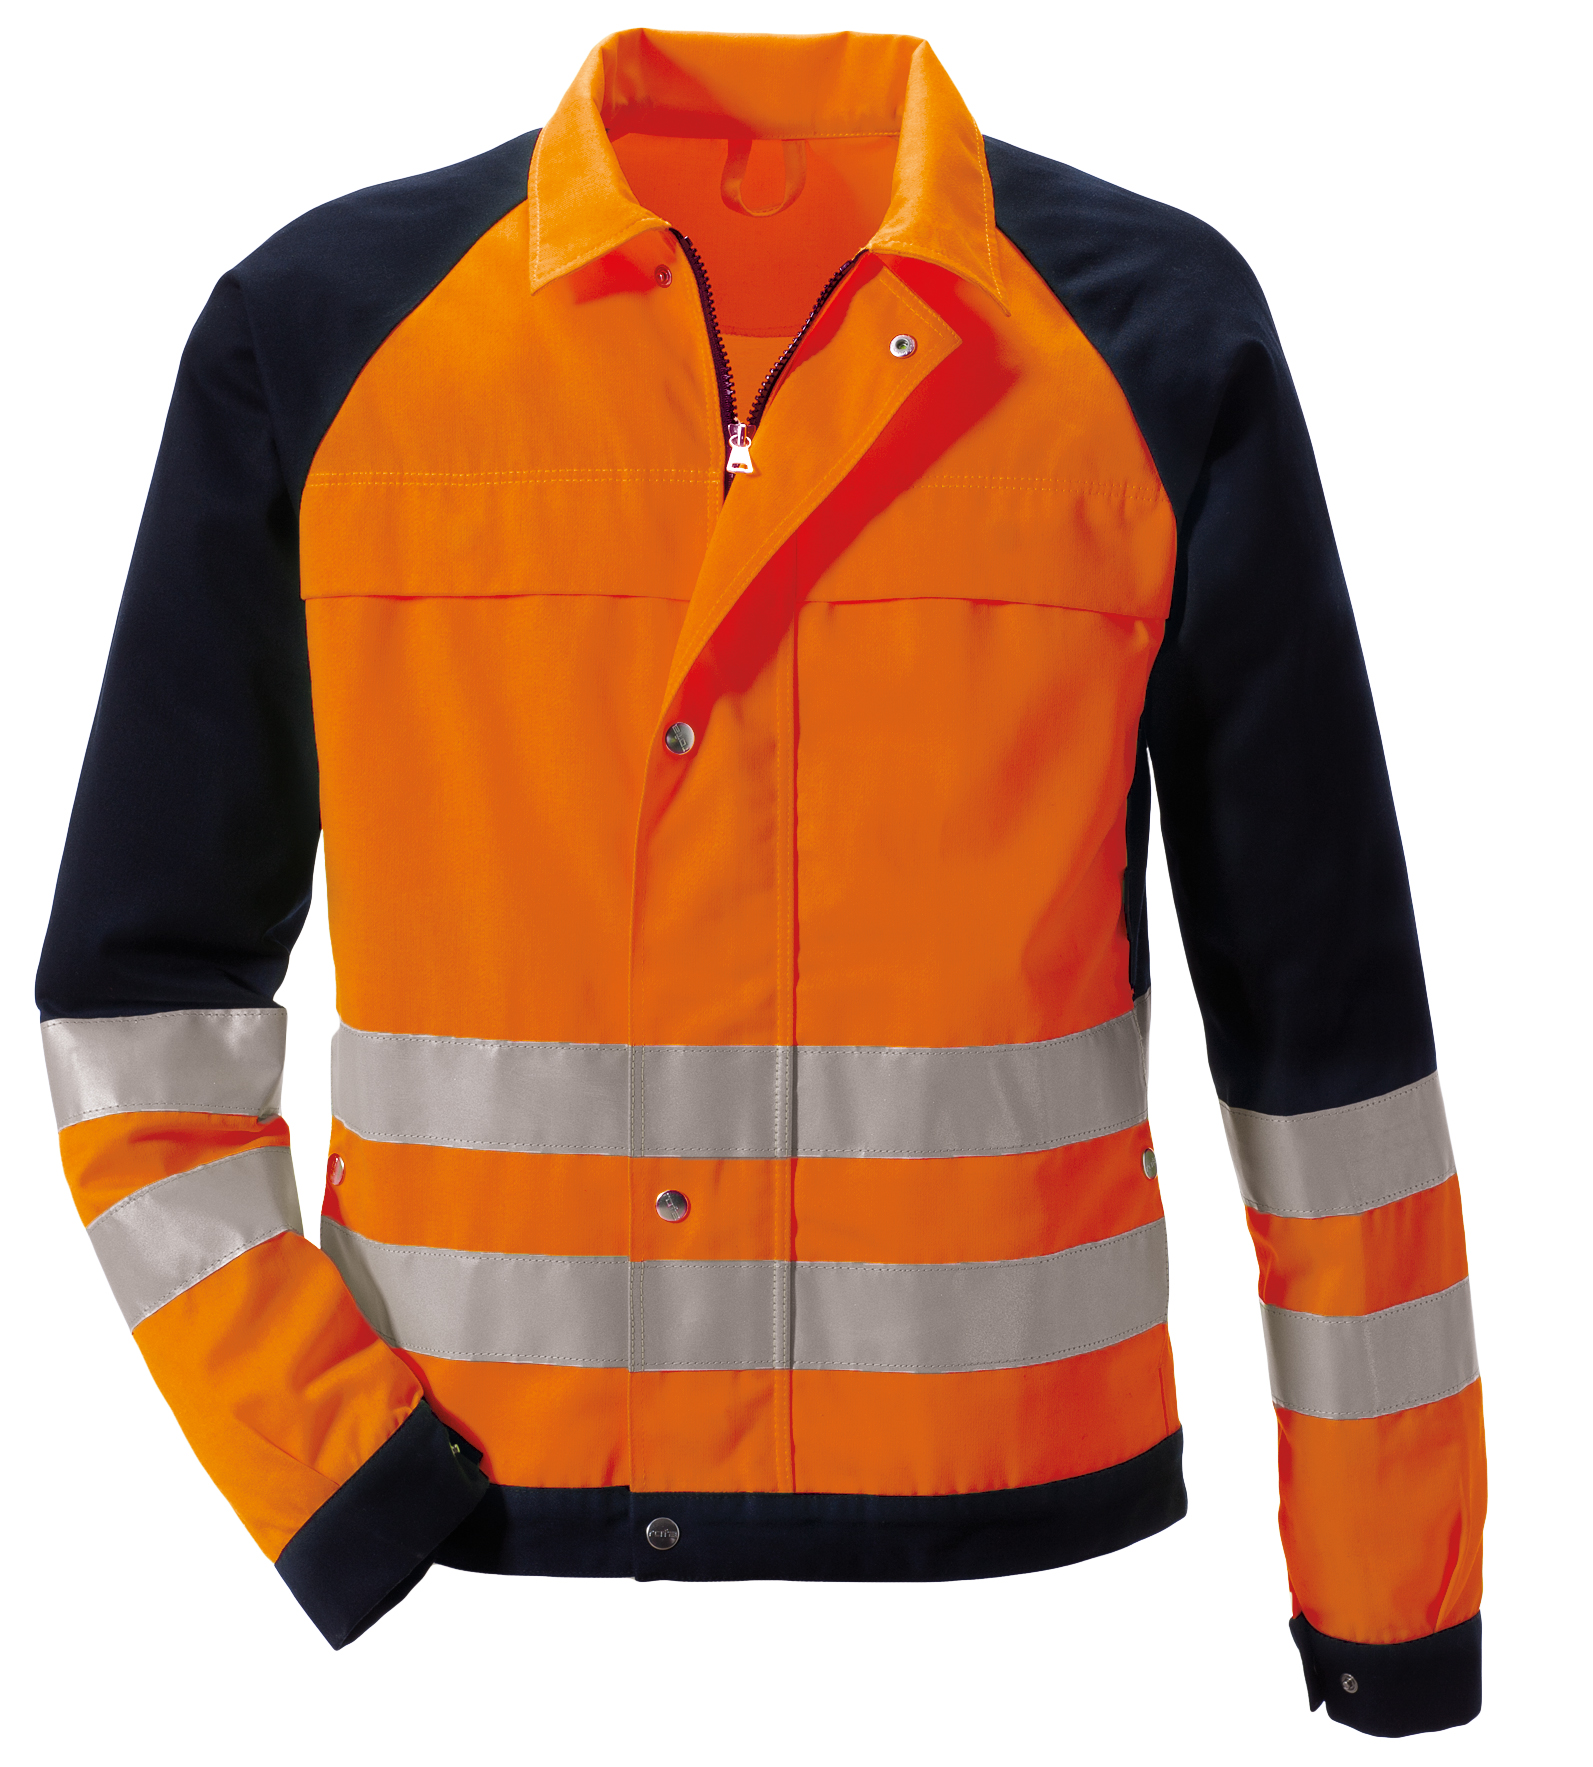 ROFA-Warnschutz, Warn-Jacke, Duo-Color, PSA, ca. 290 g/m², leuchtorange-marine
